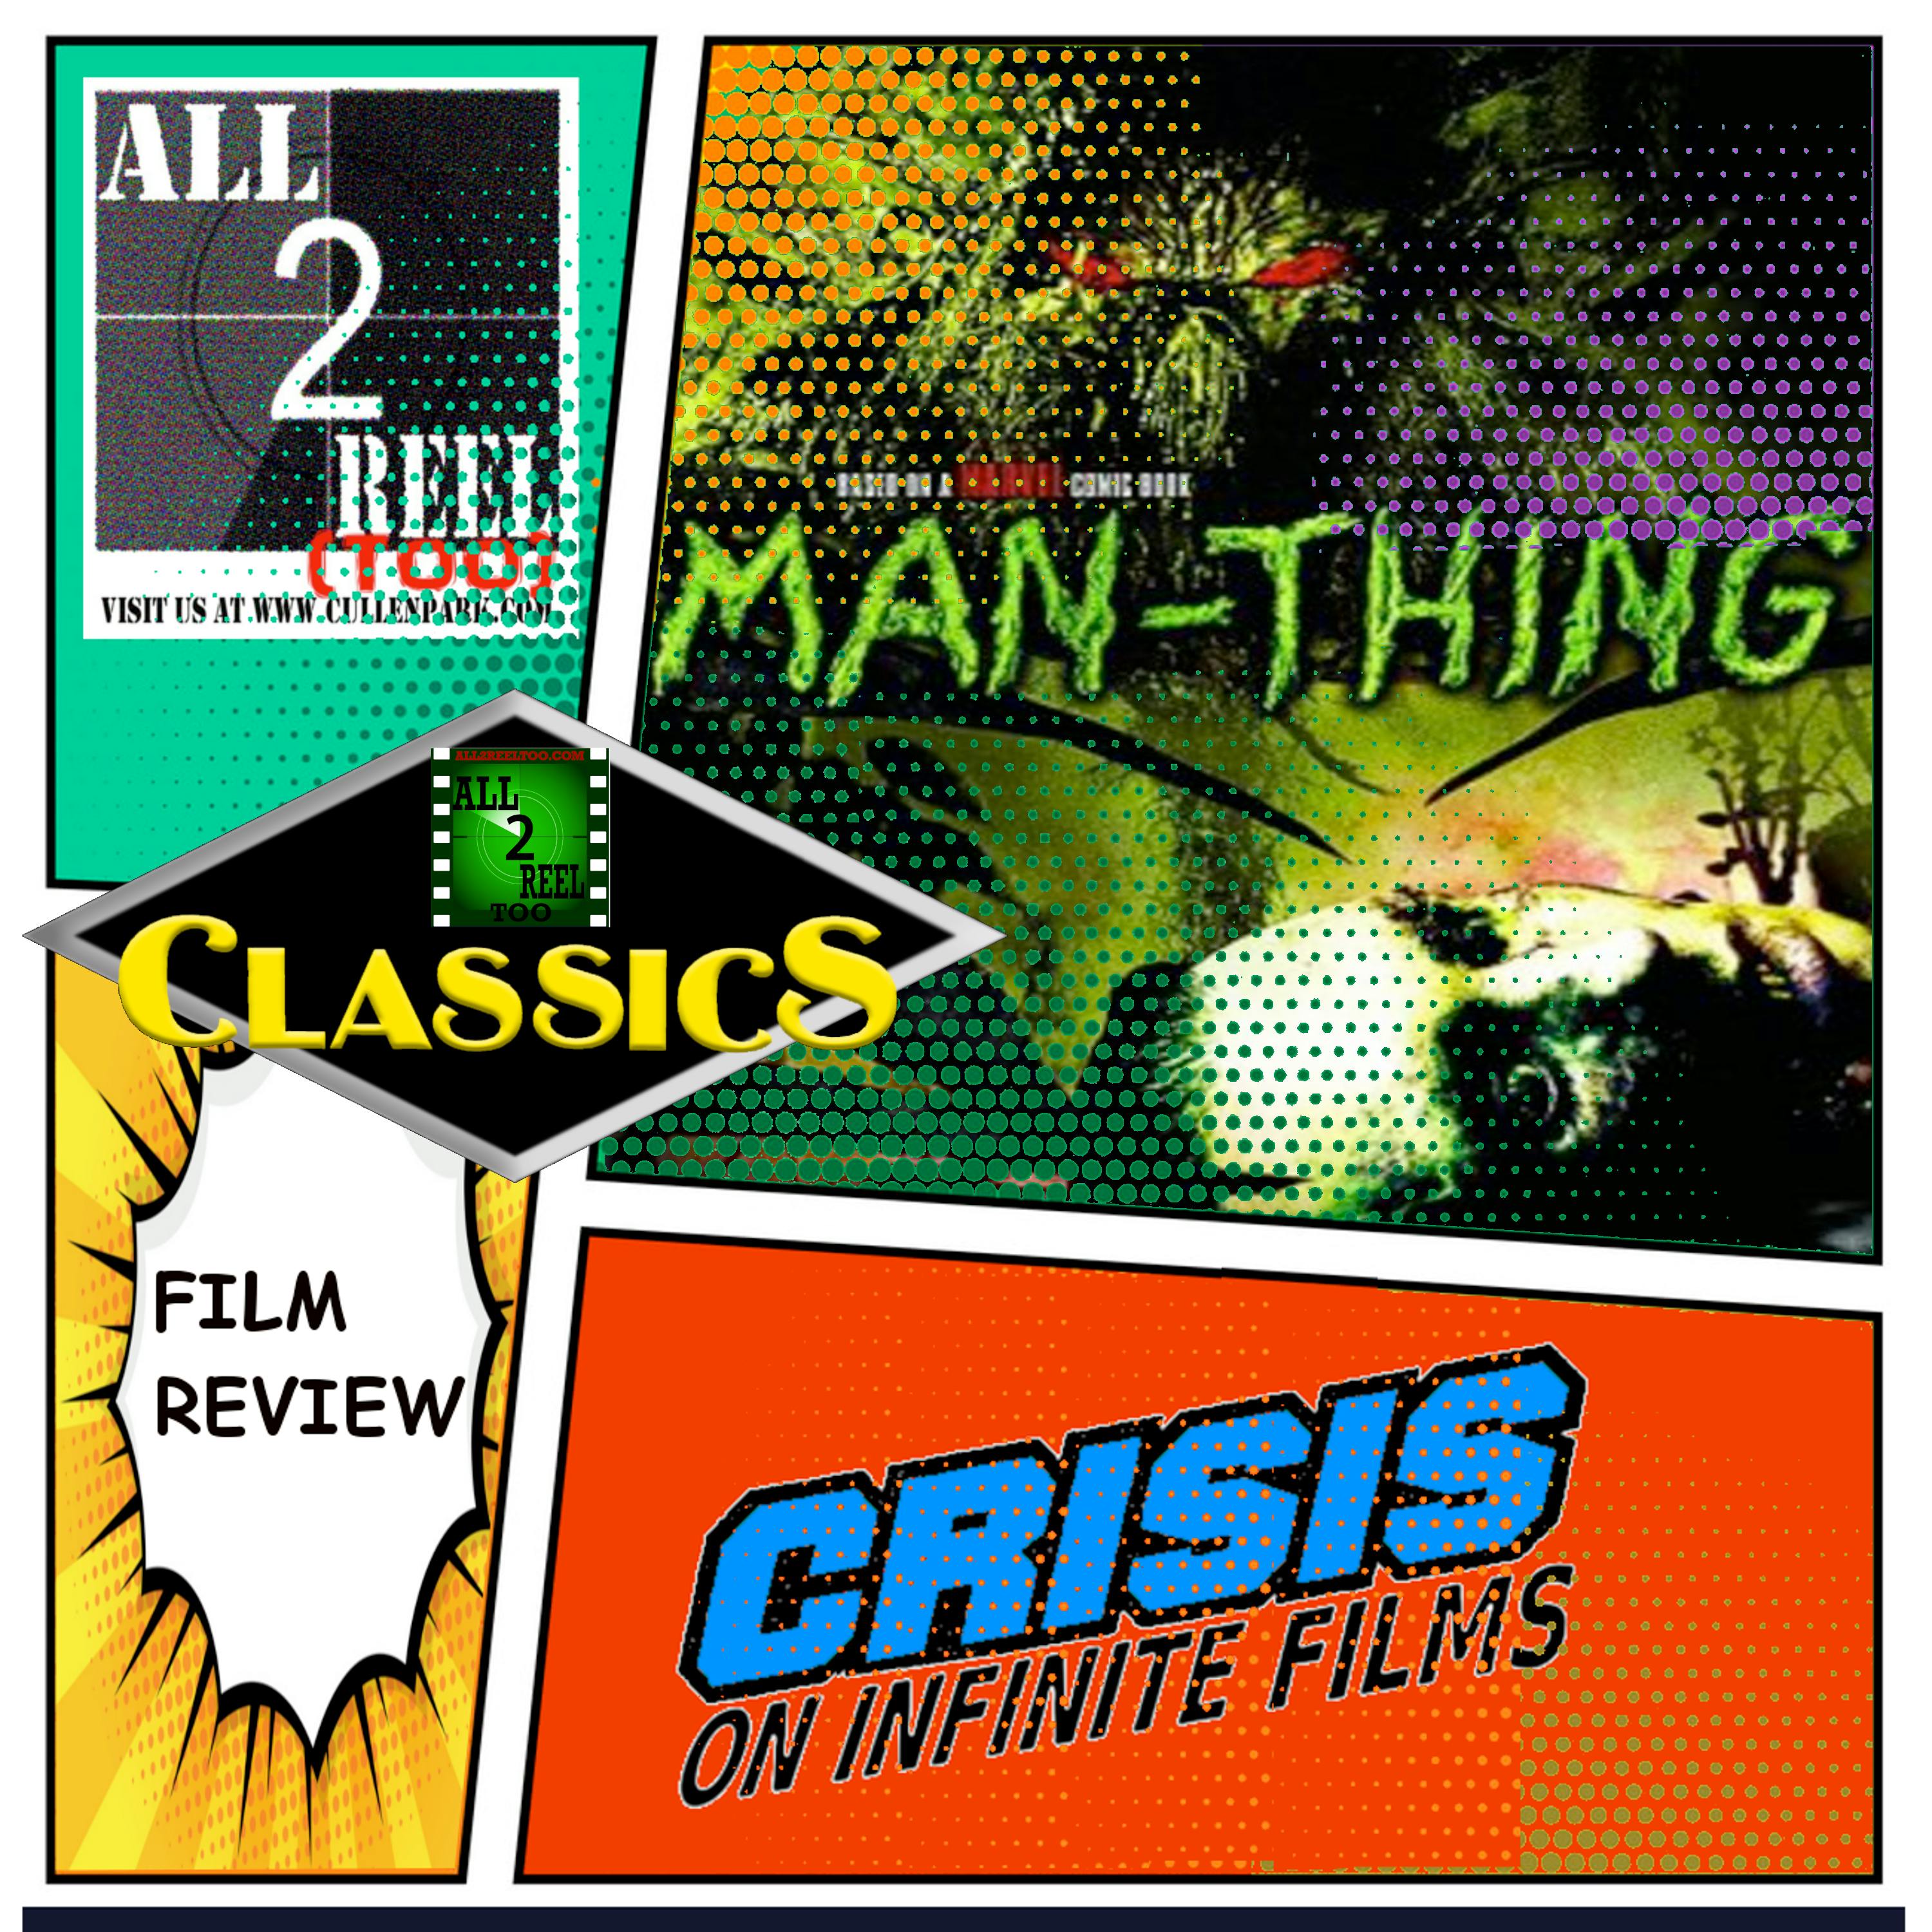 ALL2REELTOO CLASSICS - Man-Thing (2005) -Crisis On Infinite Films Image